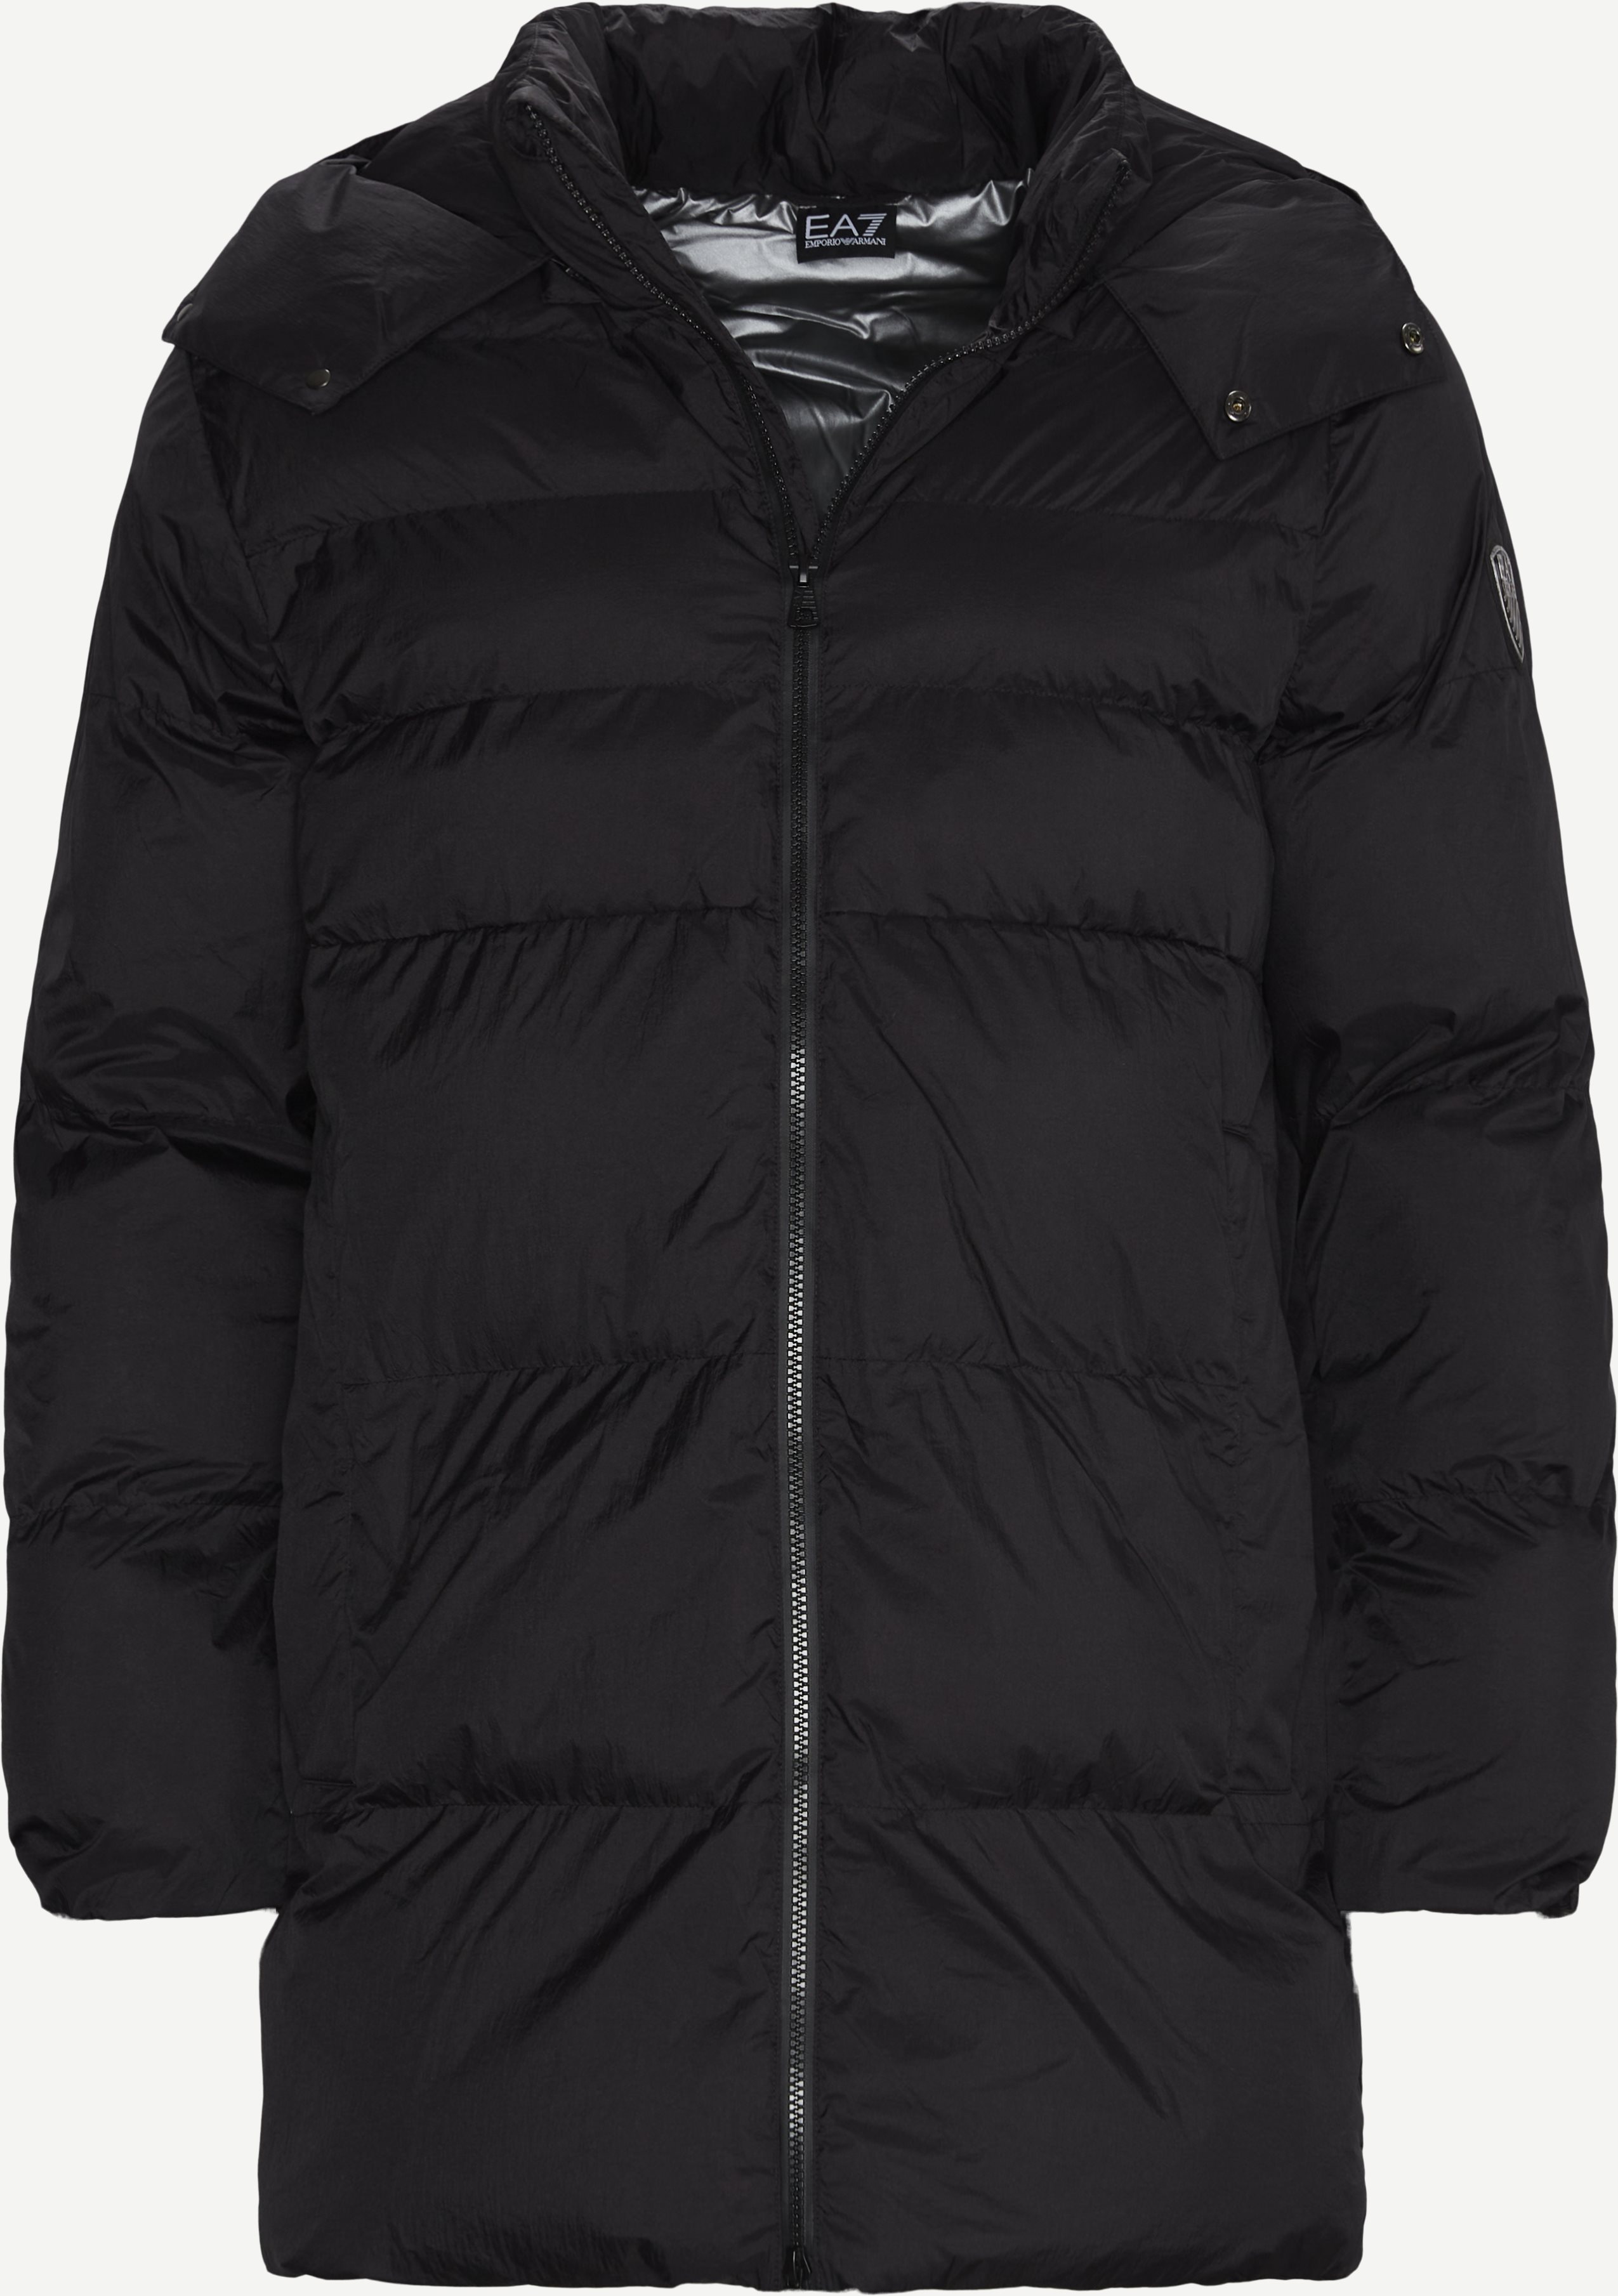 PN8CZ Jacket - Jackets - Regular fit - Black